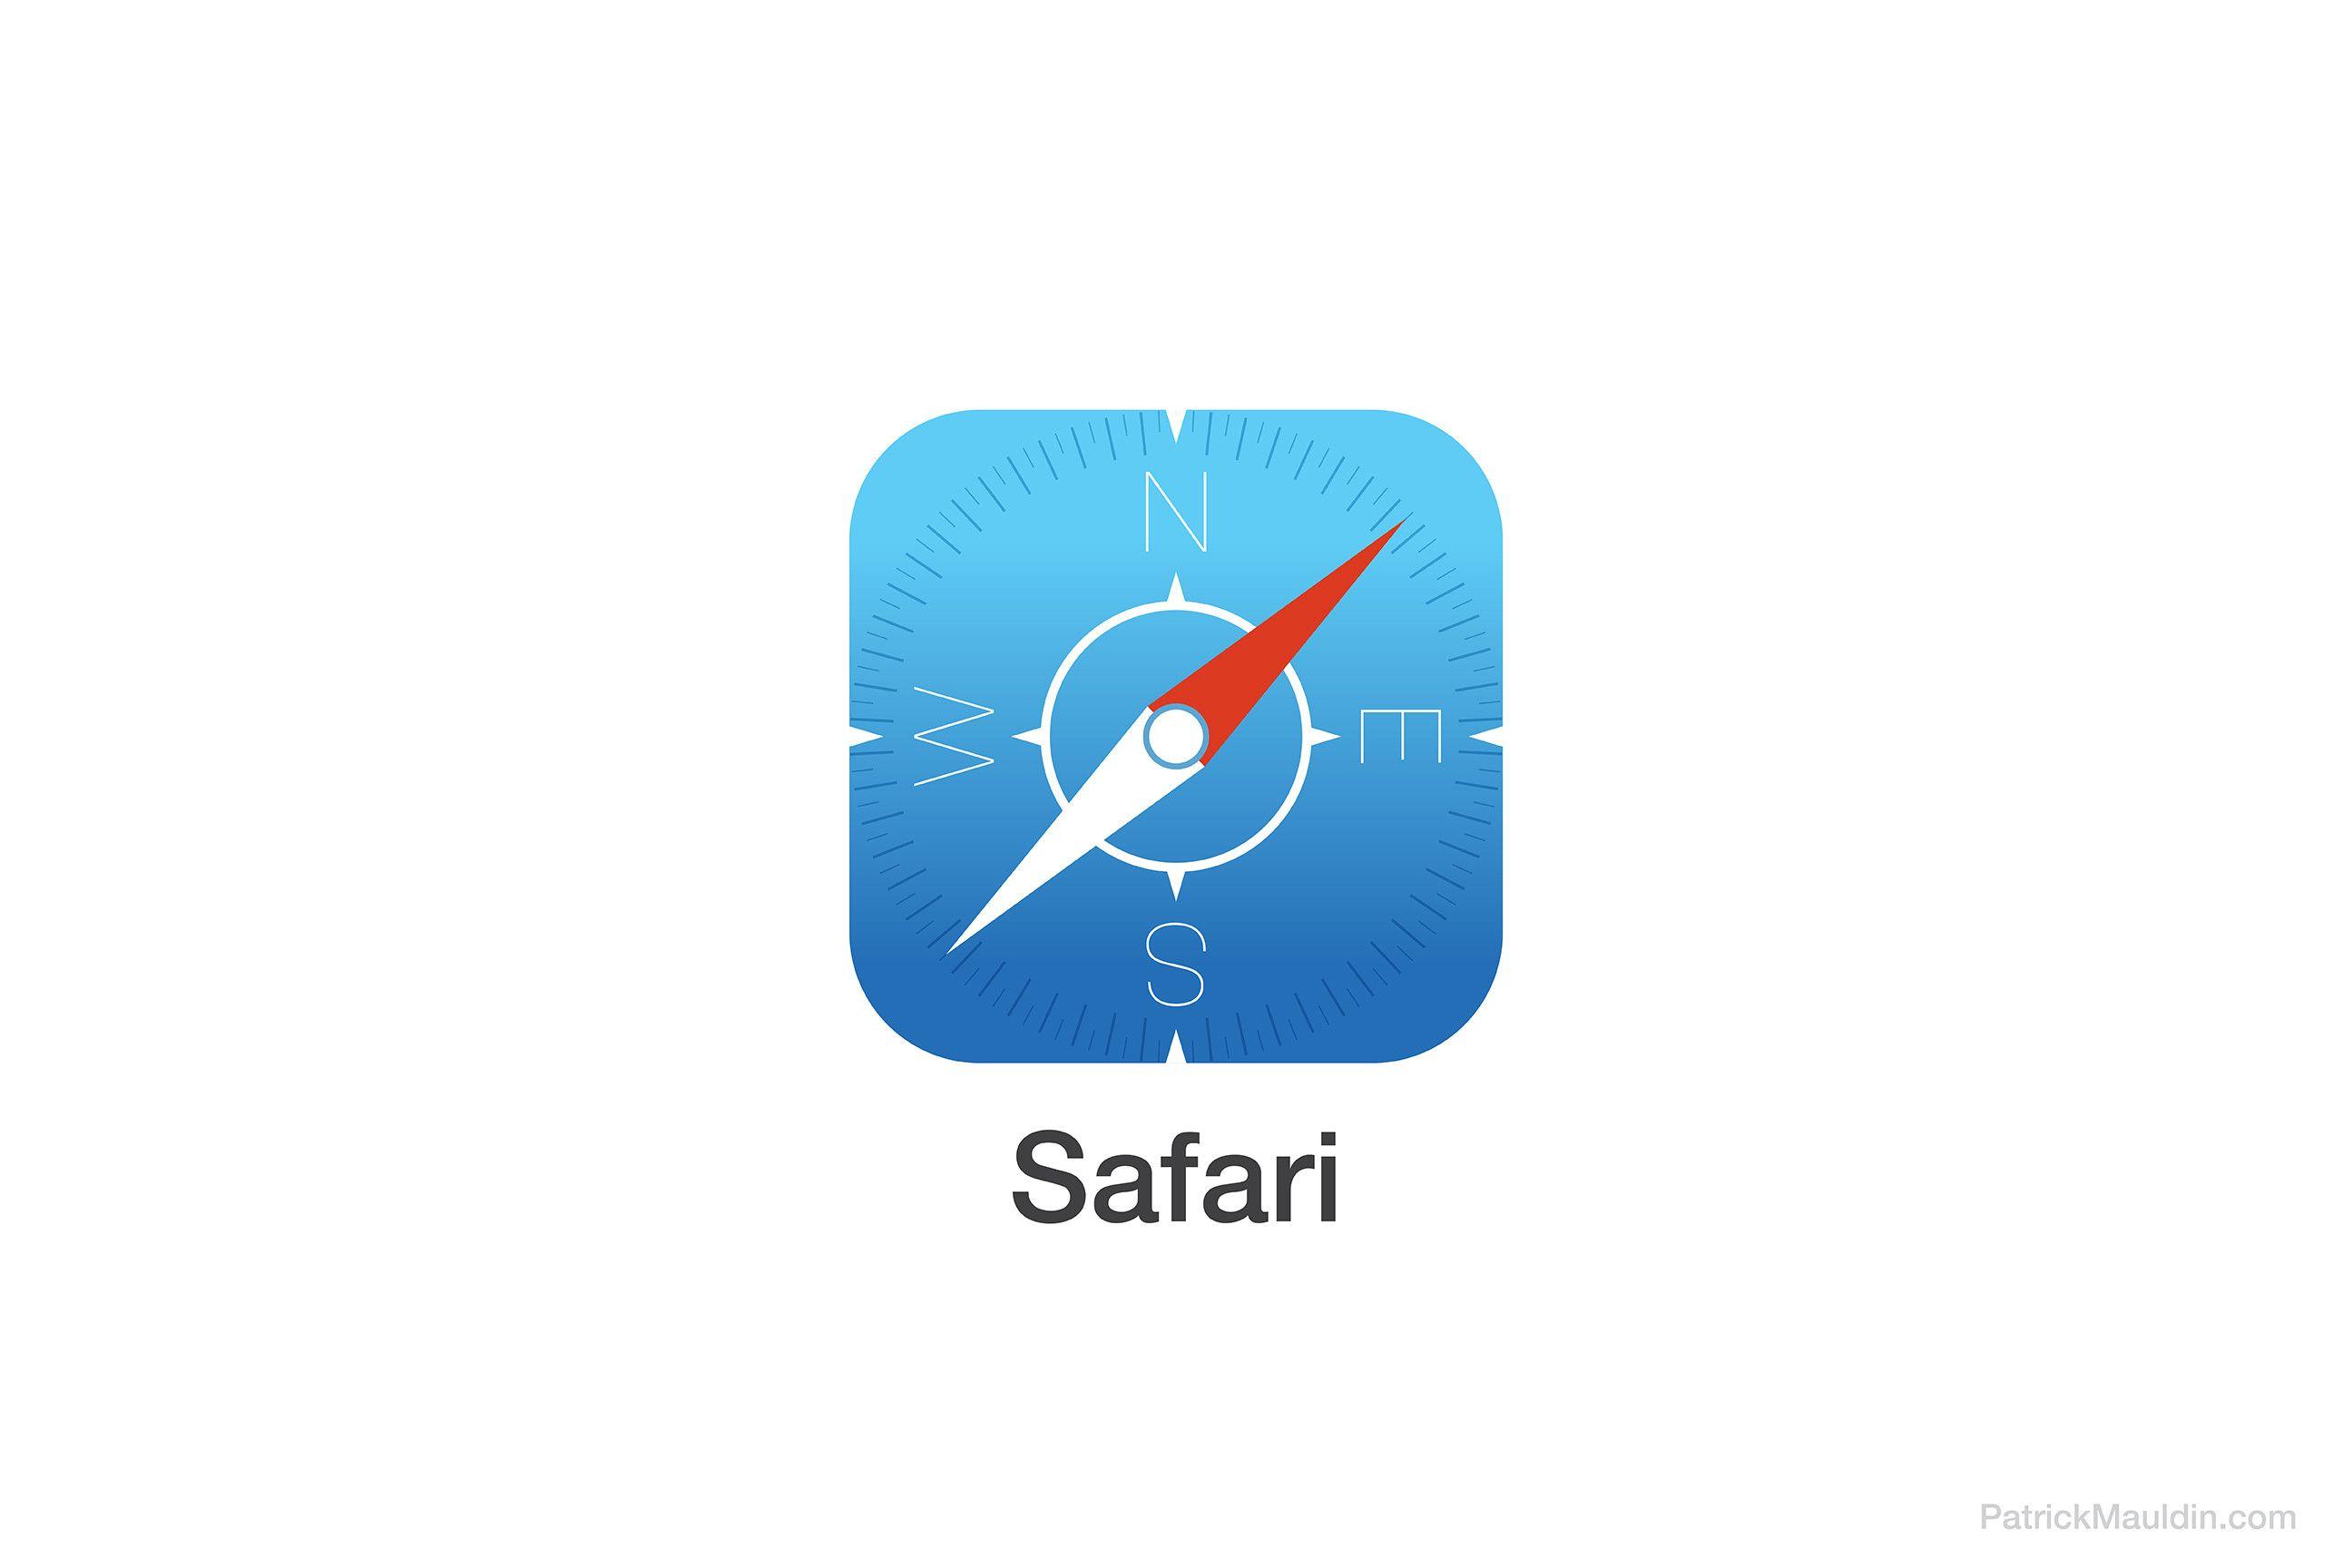 New Safari Logo - I redesigned the new iOS 7 Safari icon. What do you think? : apple